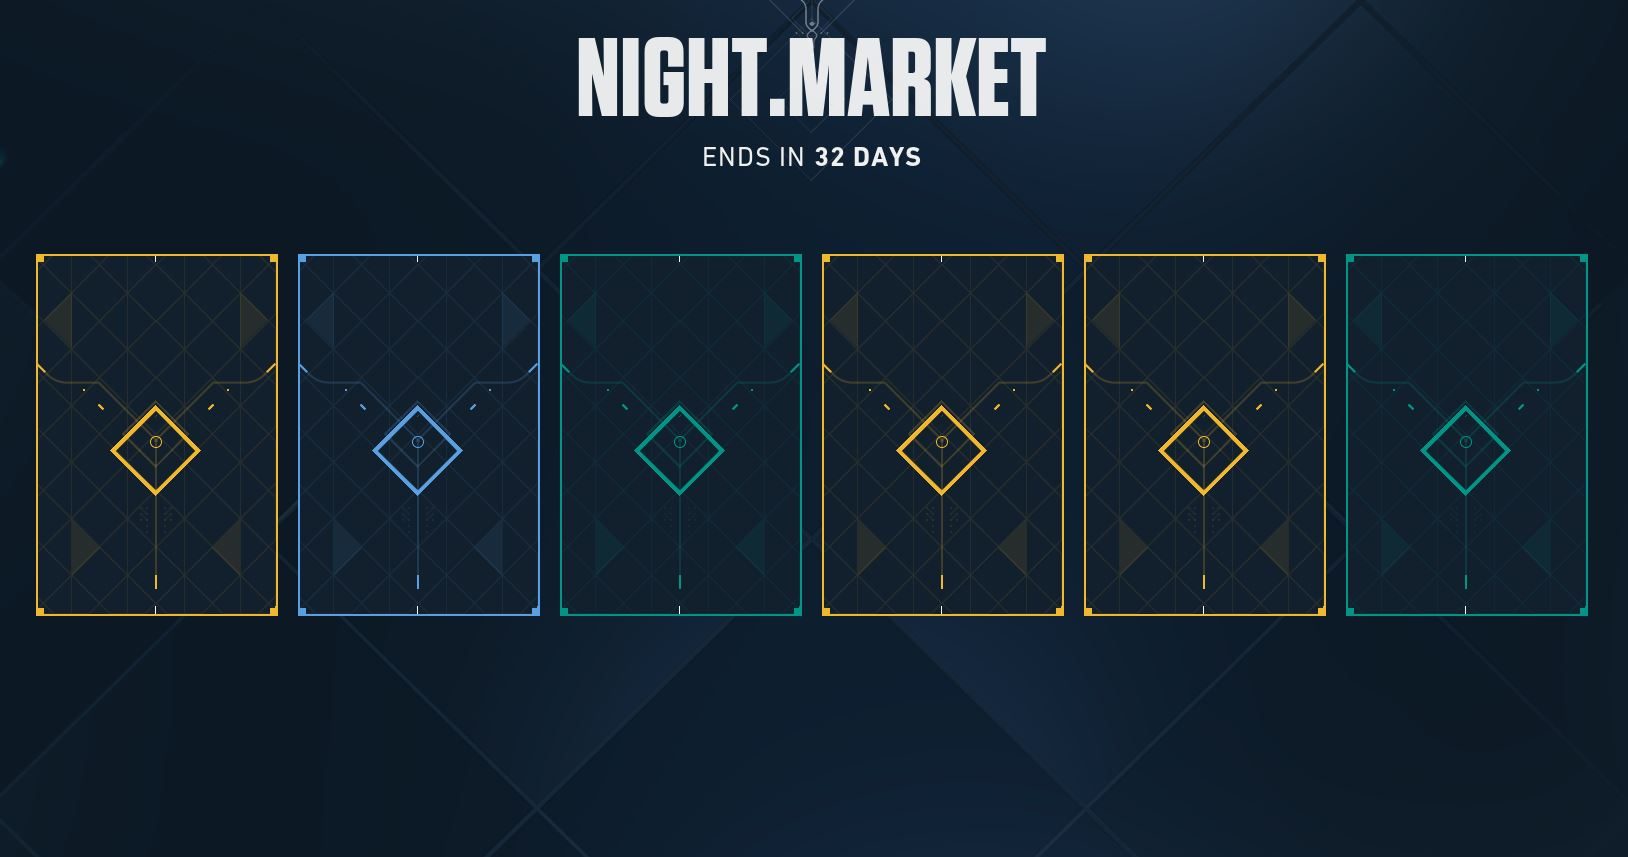 Night Market Cards